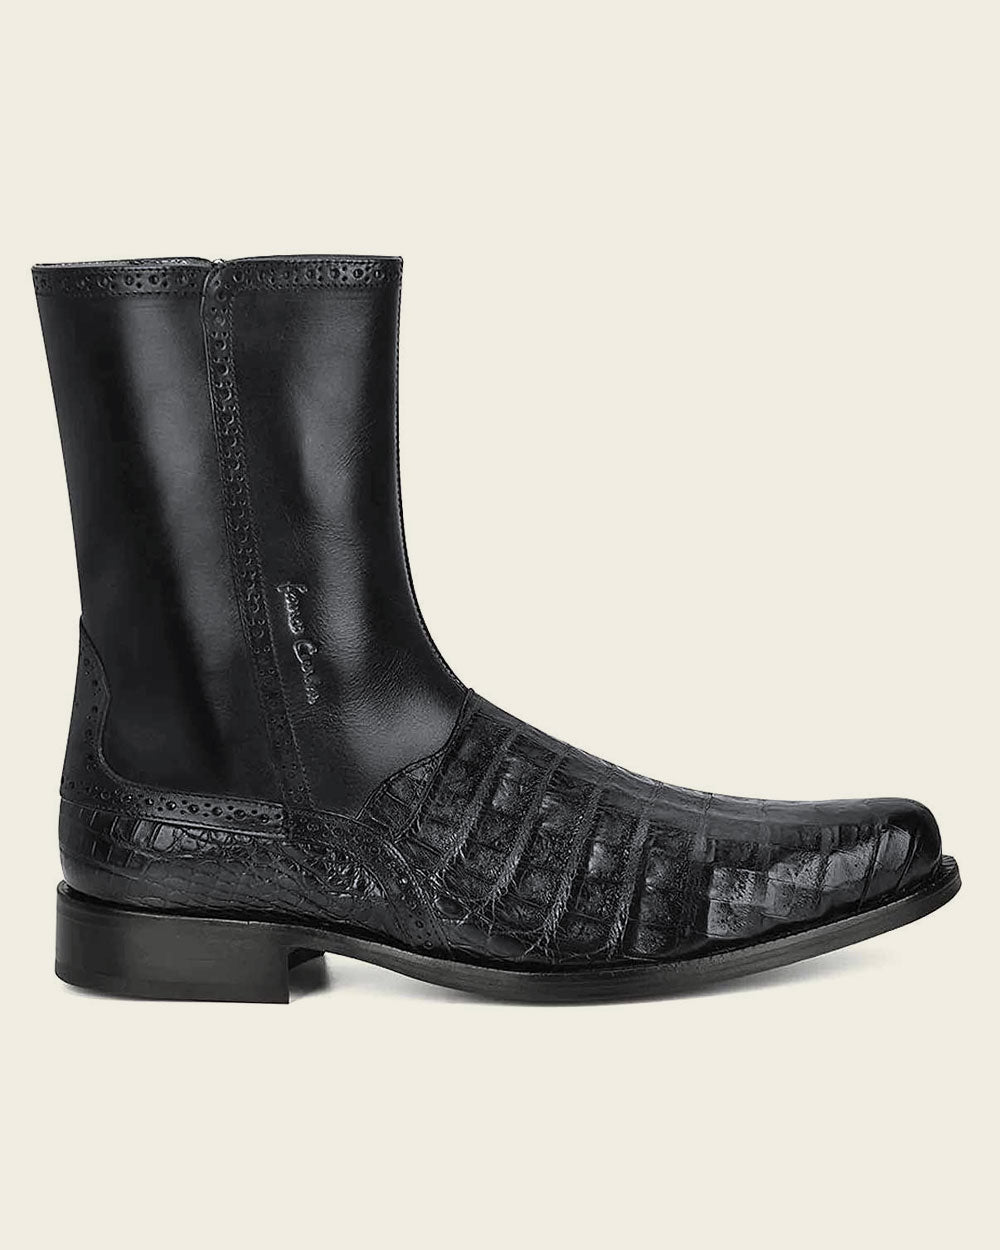 Superior craftsmanship: Explore Cuadra's hand-painted black leather boots.